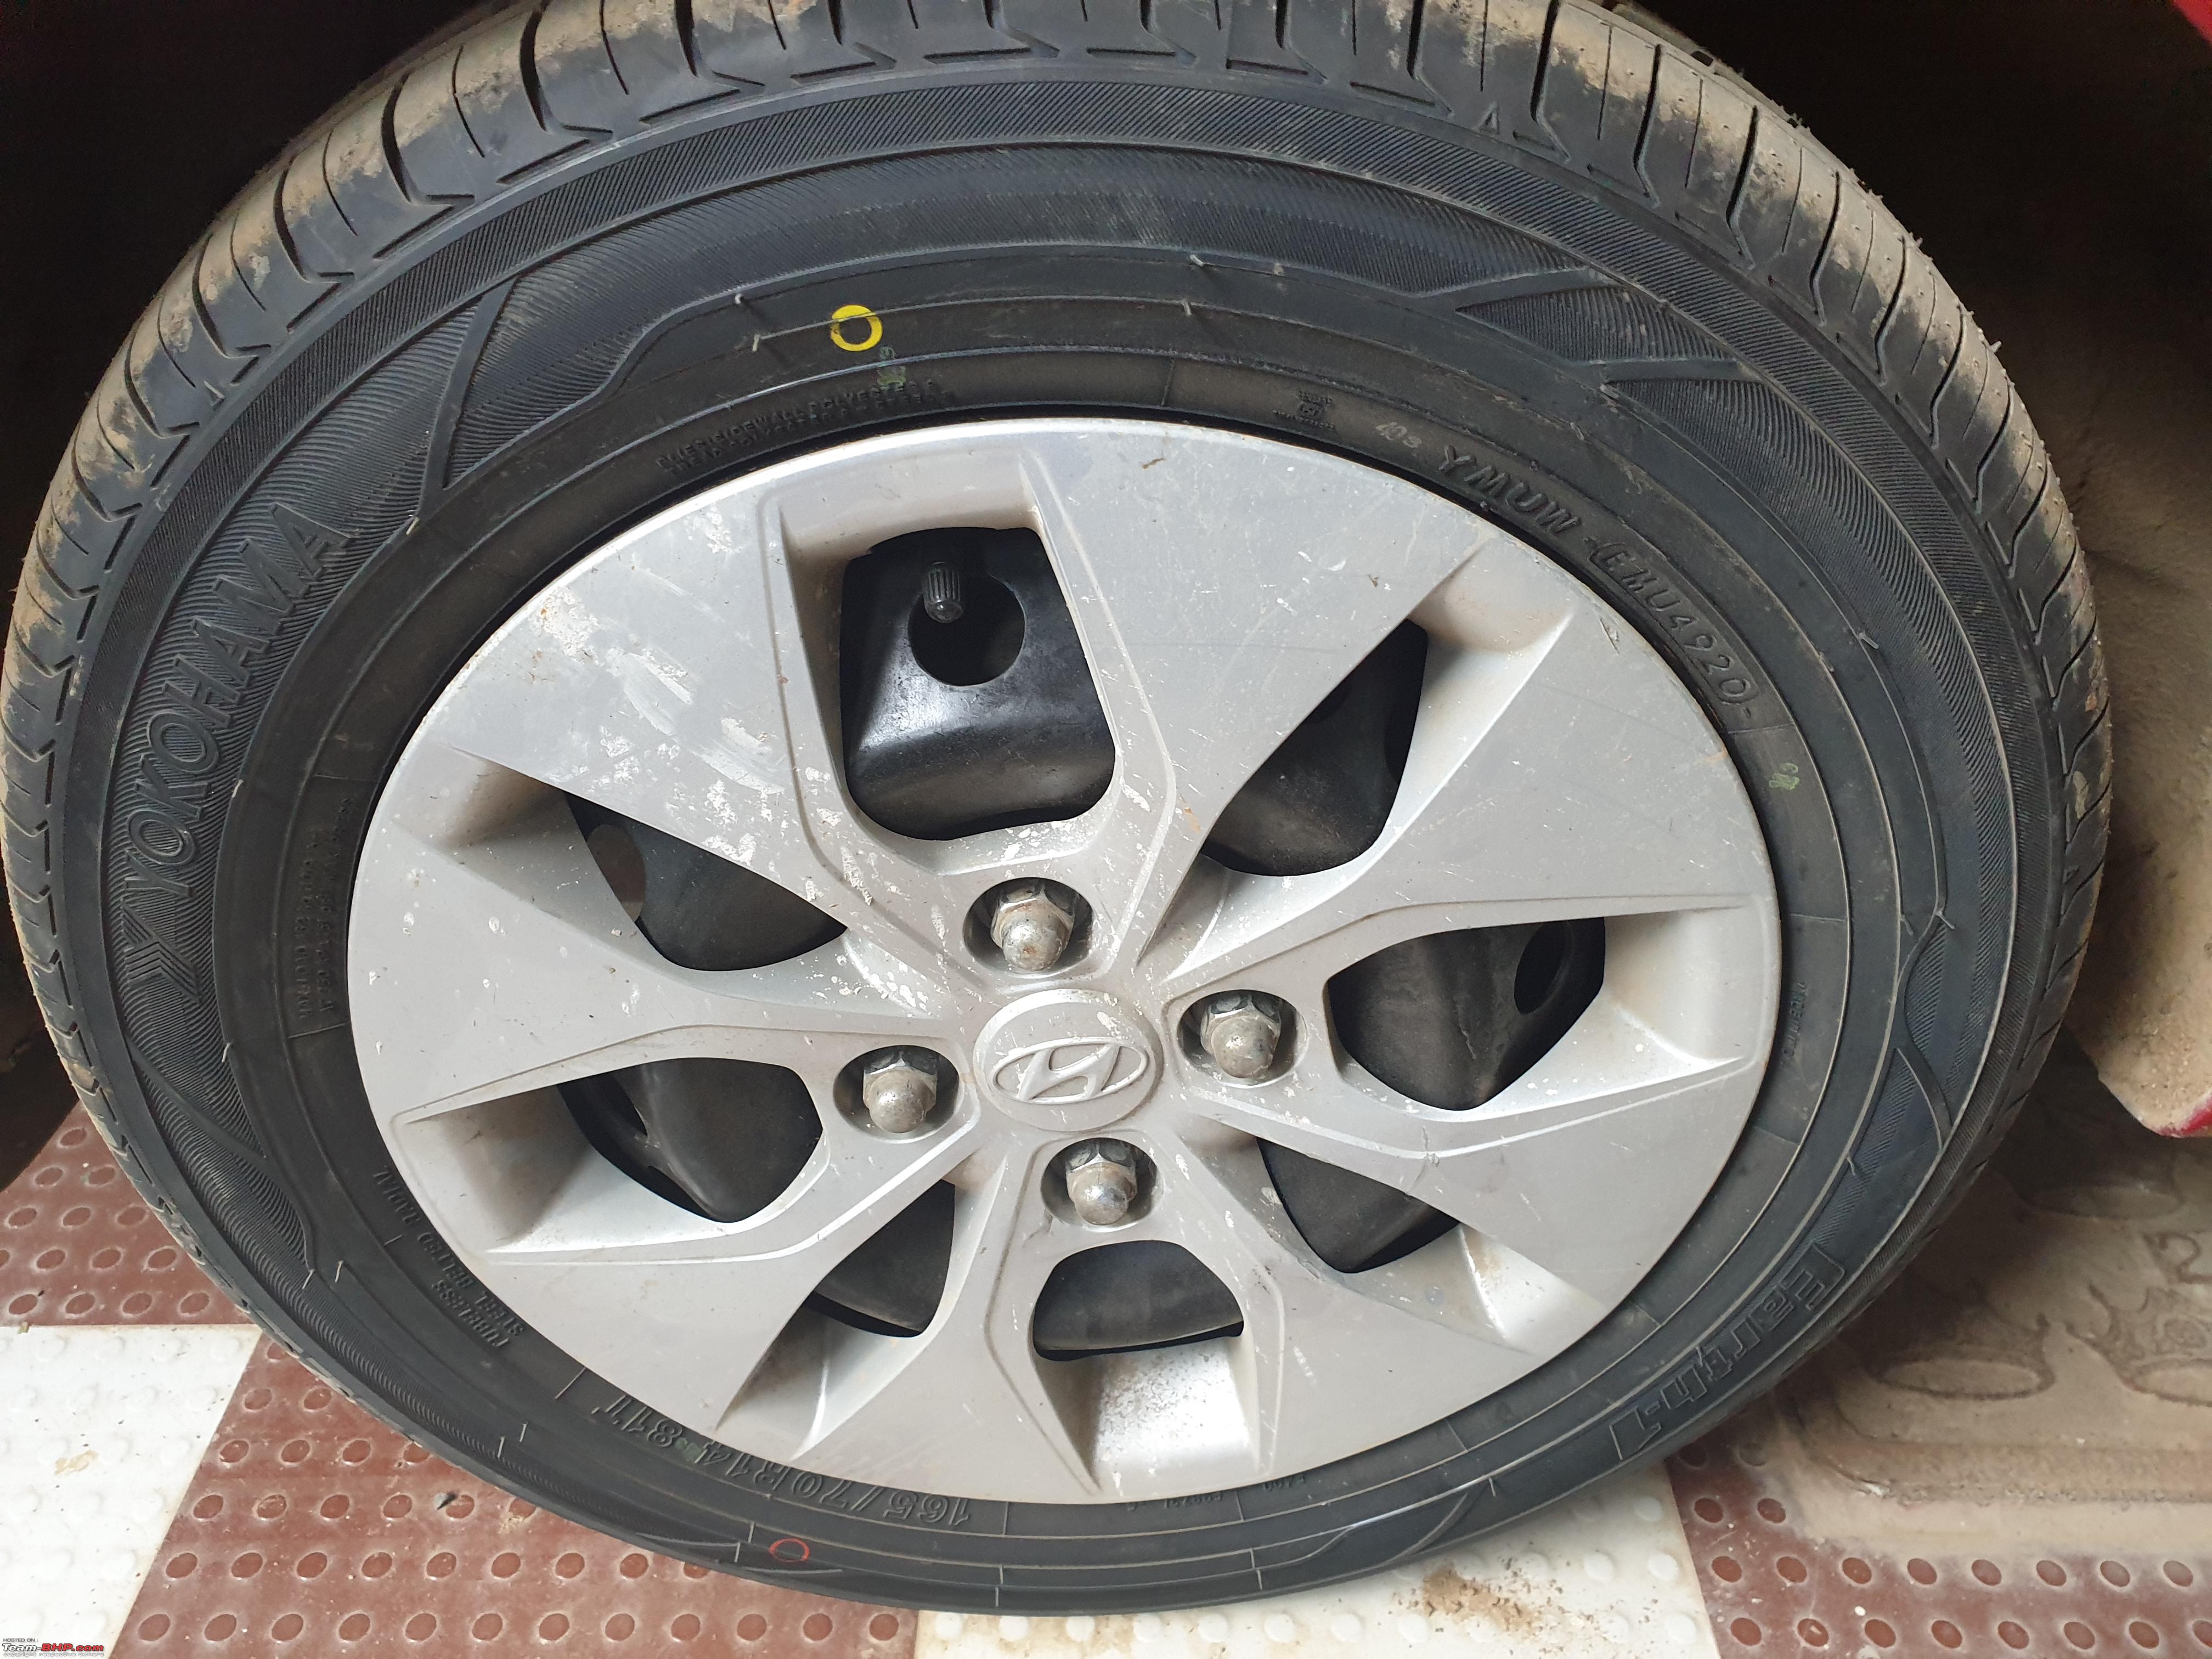 Hyundai Grand i10 & Xcent : Tyre & wheel upgrade thread - Page 4 - Team-BHP